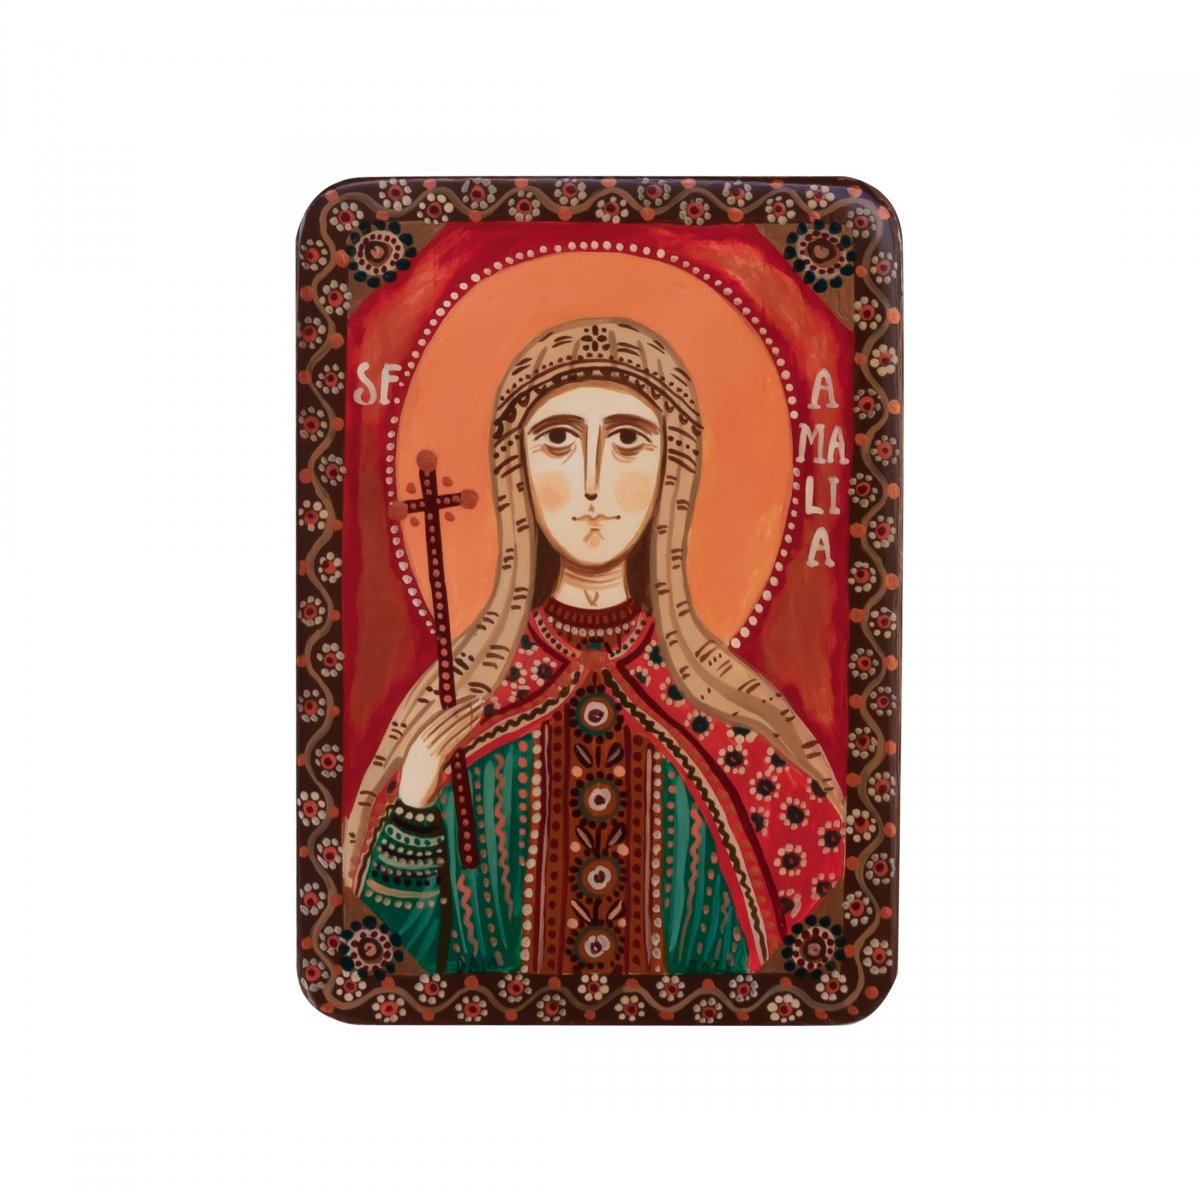 Wood icon, "Saint Amalia", miniature, 7x10cm